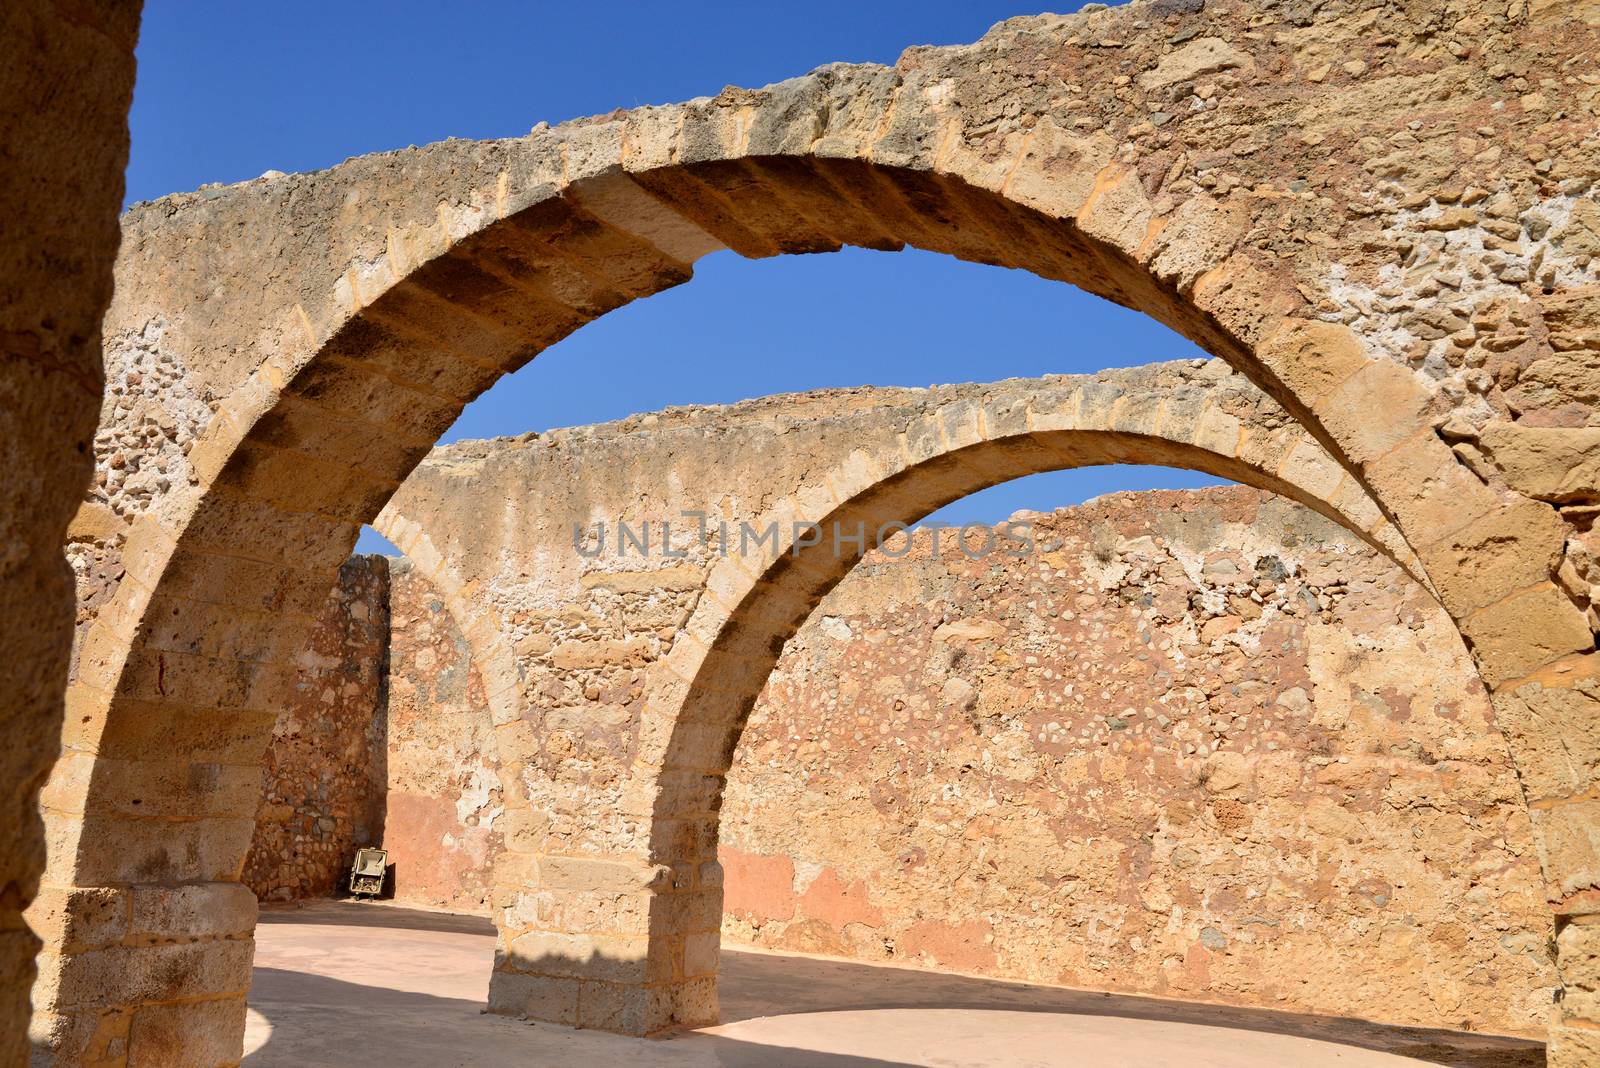 Rethymno Fortezza fortress arcade by tony4urban